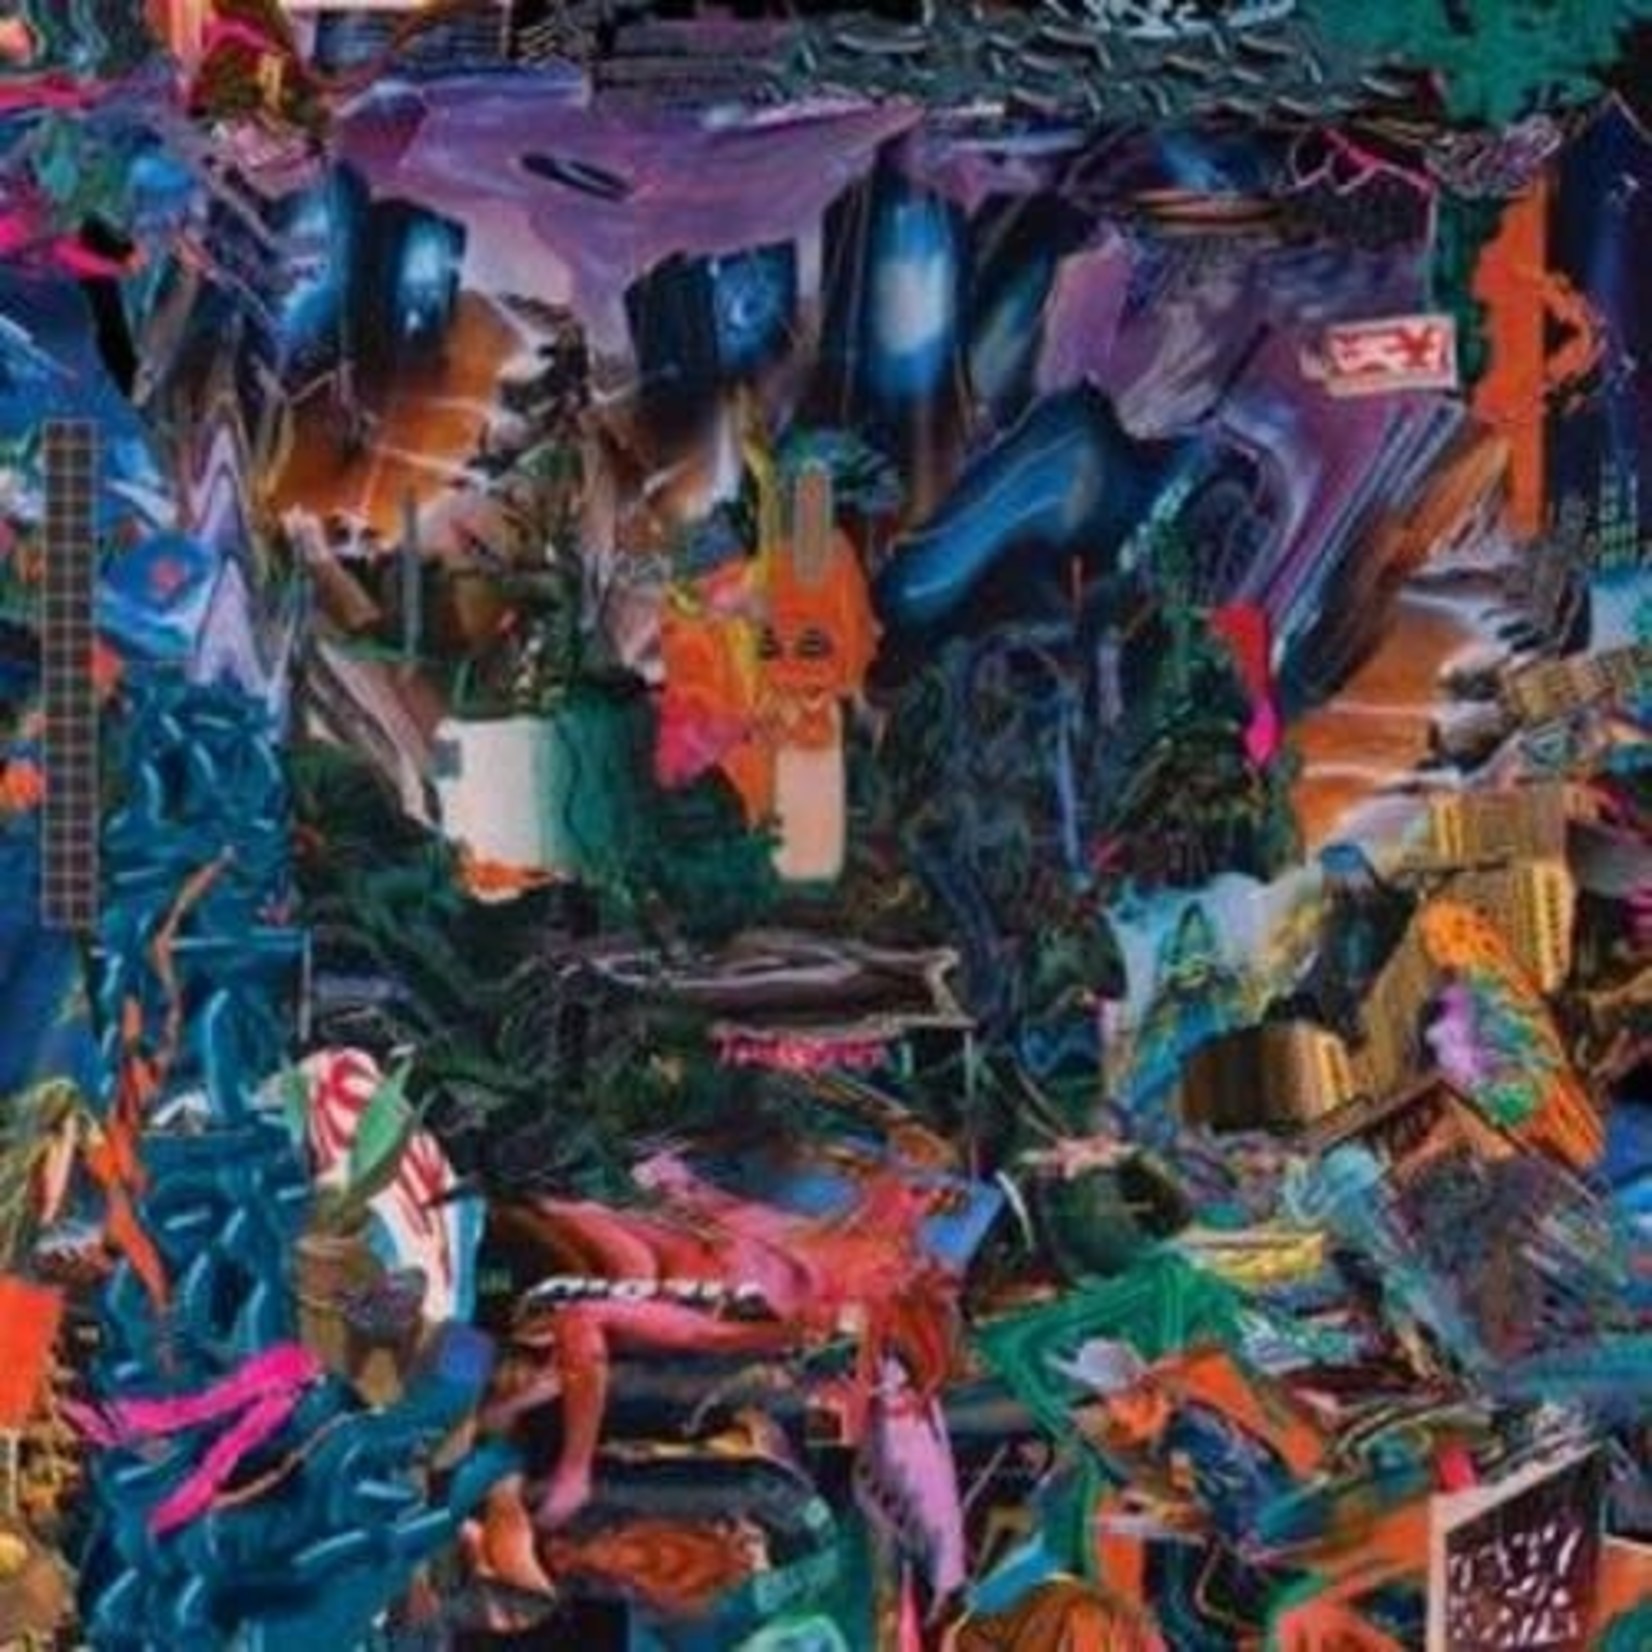 Rough Trade Black Midi - Cavalcade (LP)